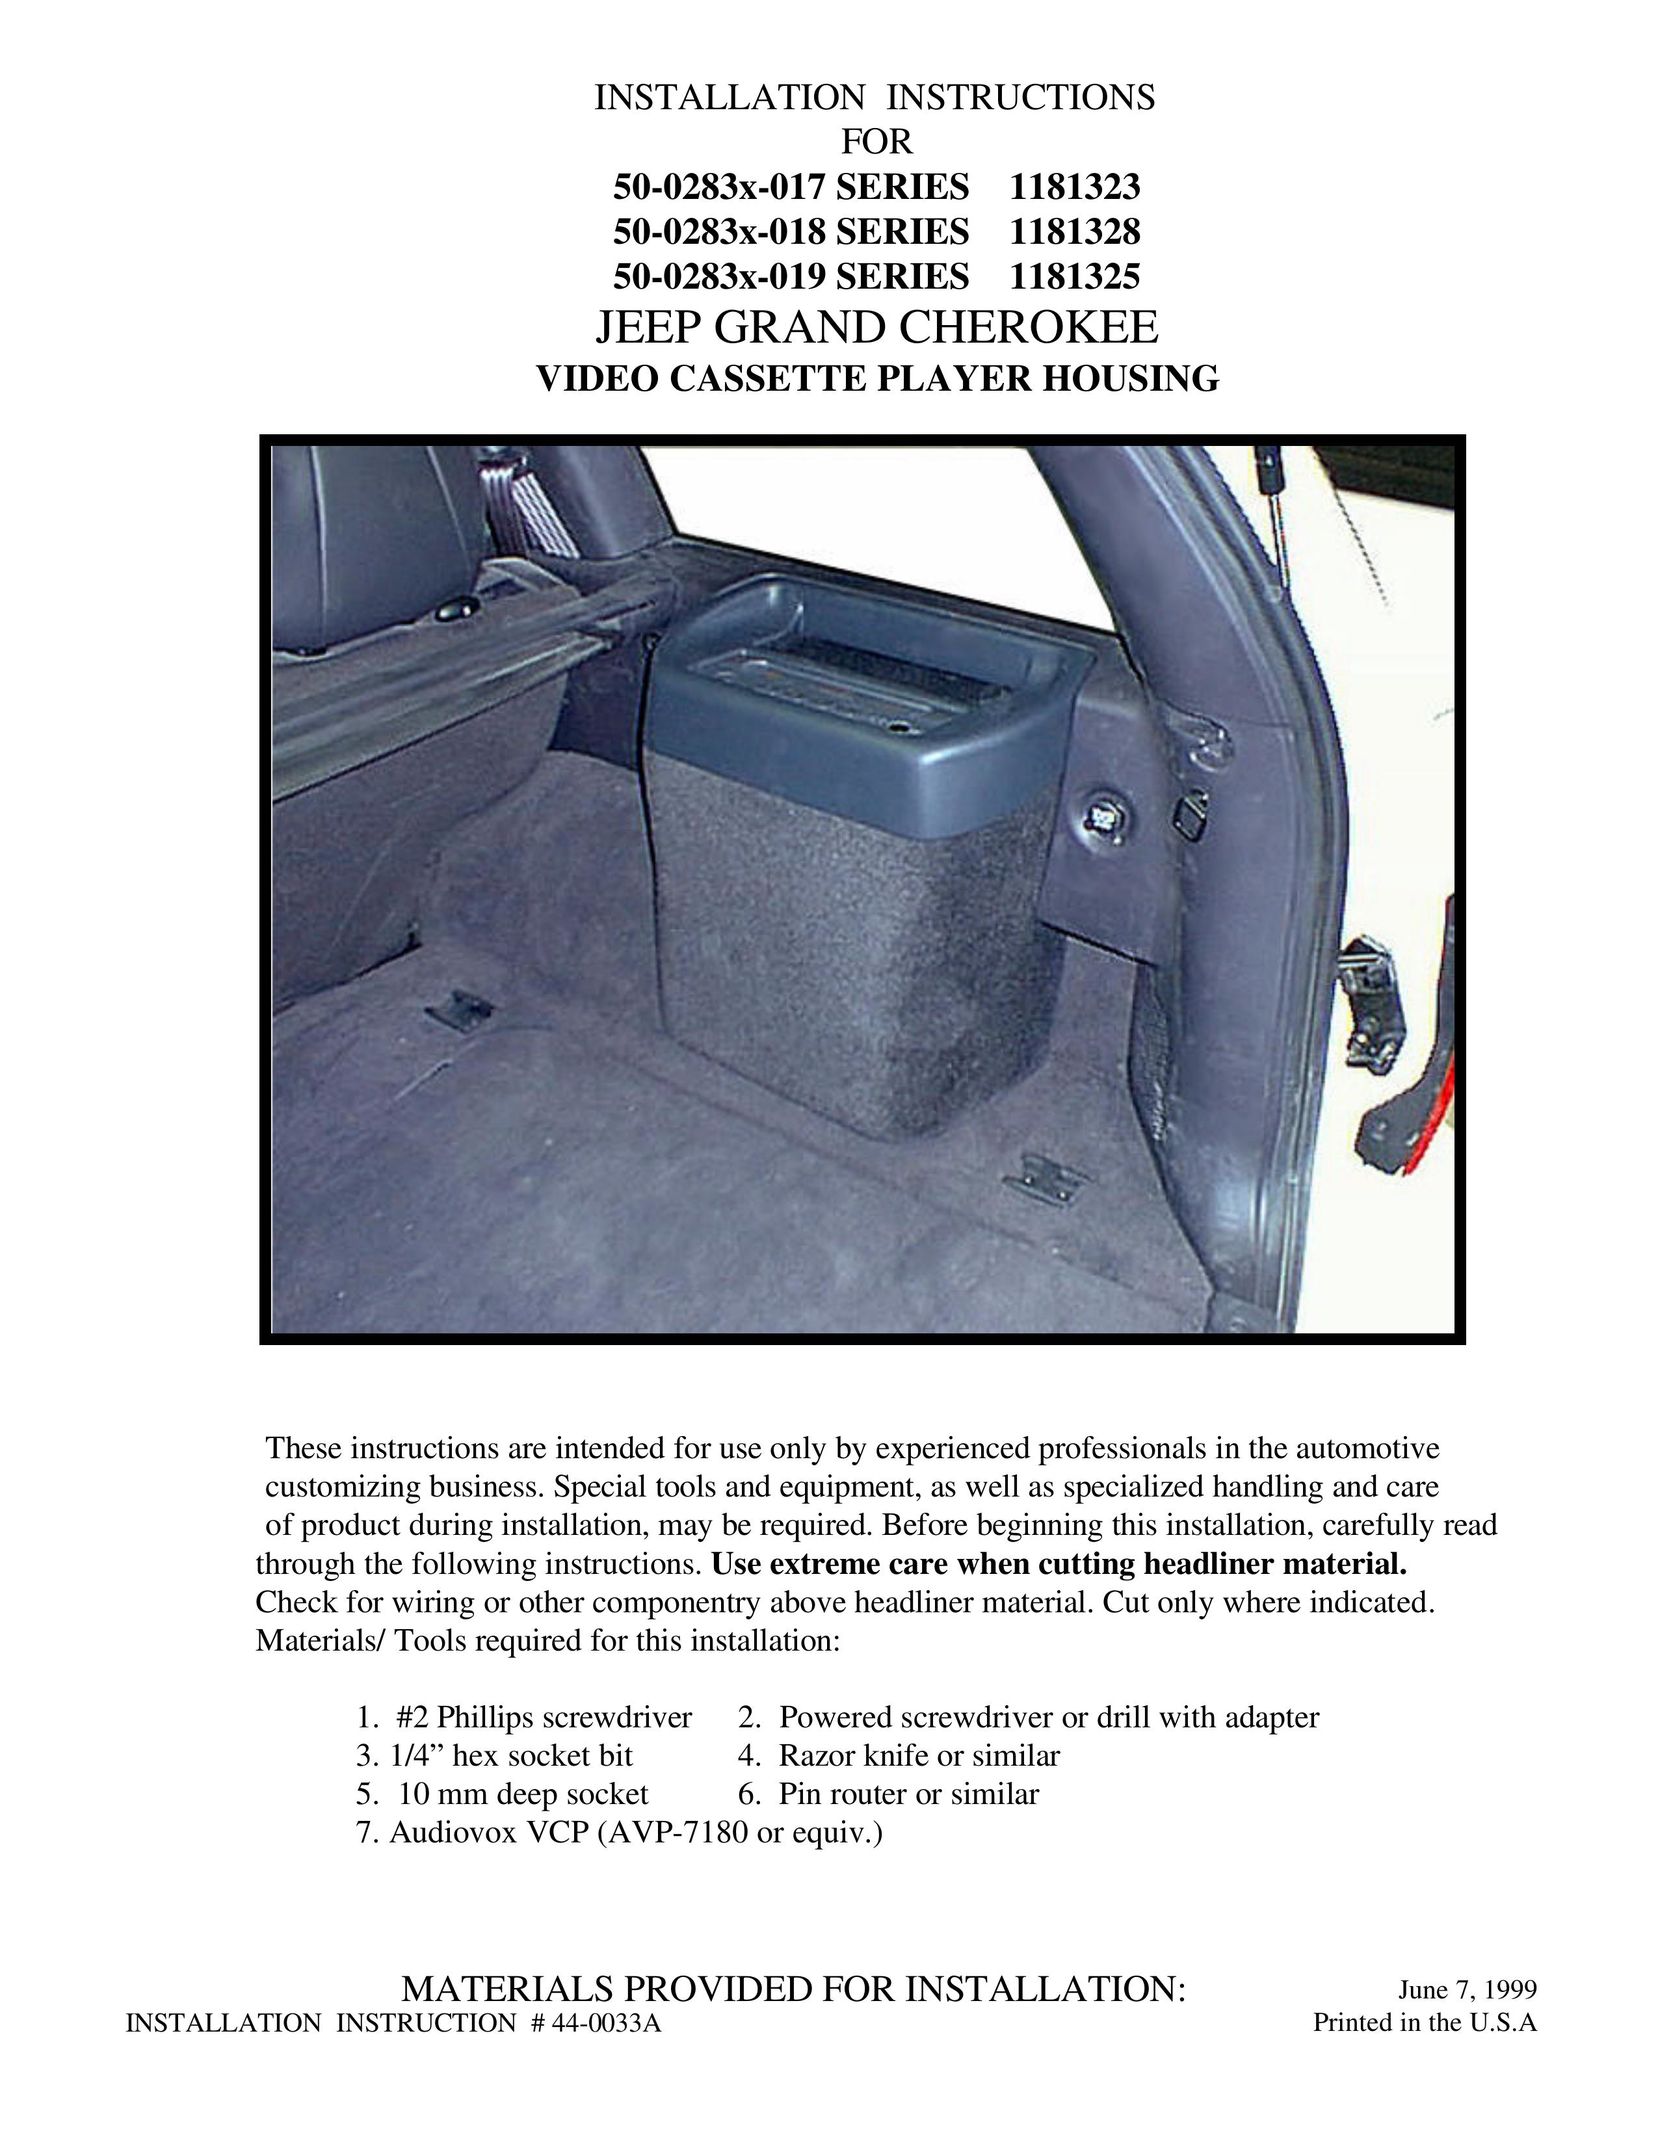 Jeep 50-0283x-017 SERIES VCR User Manual